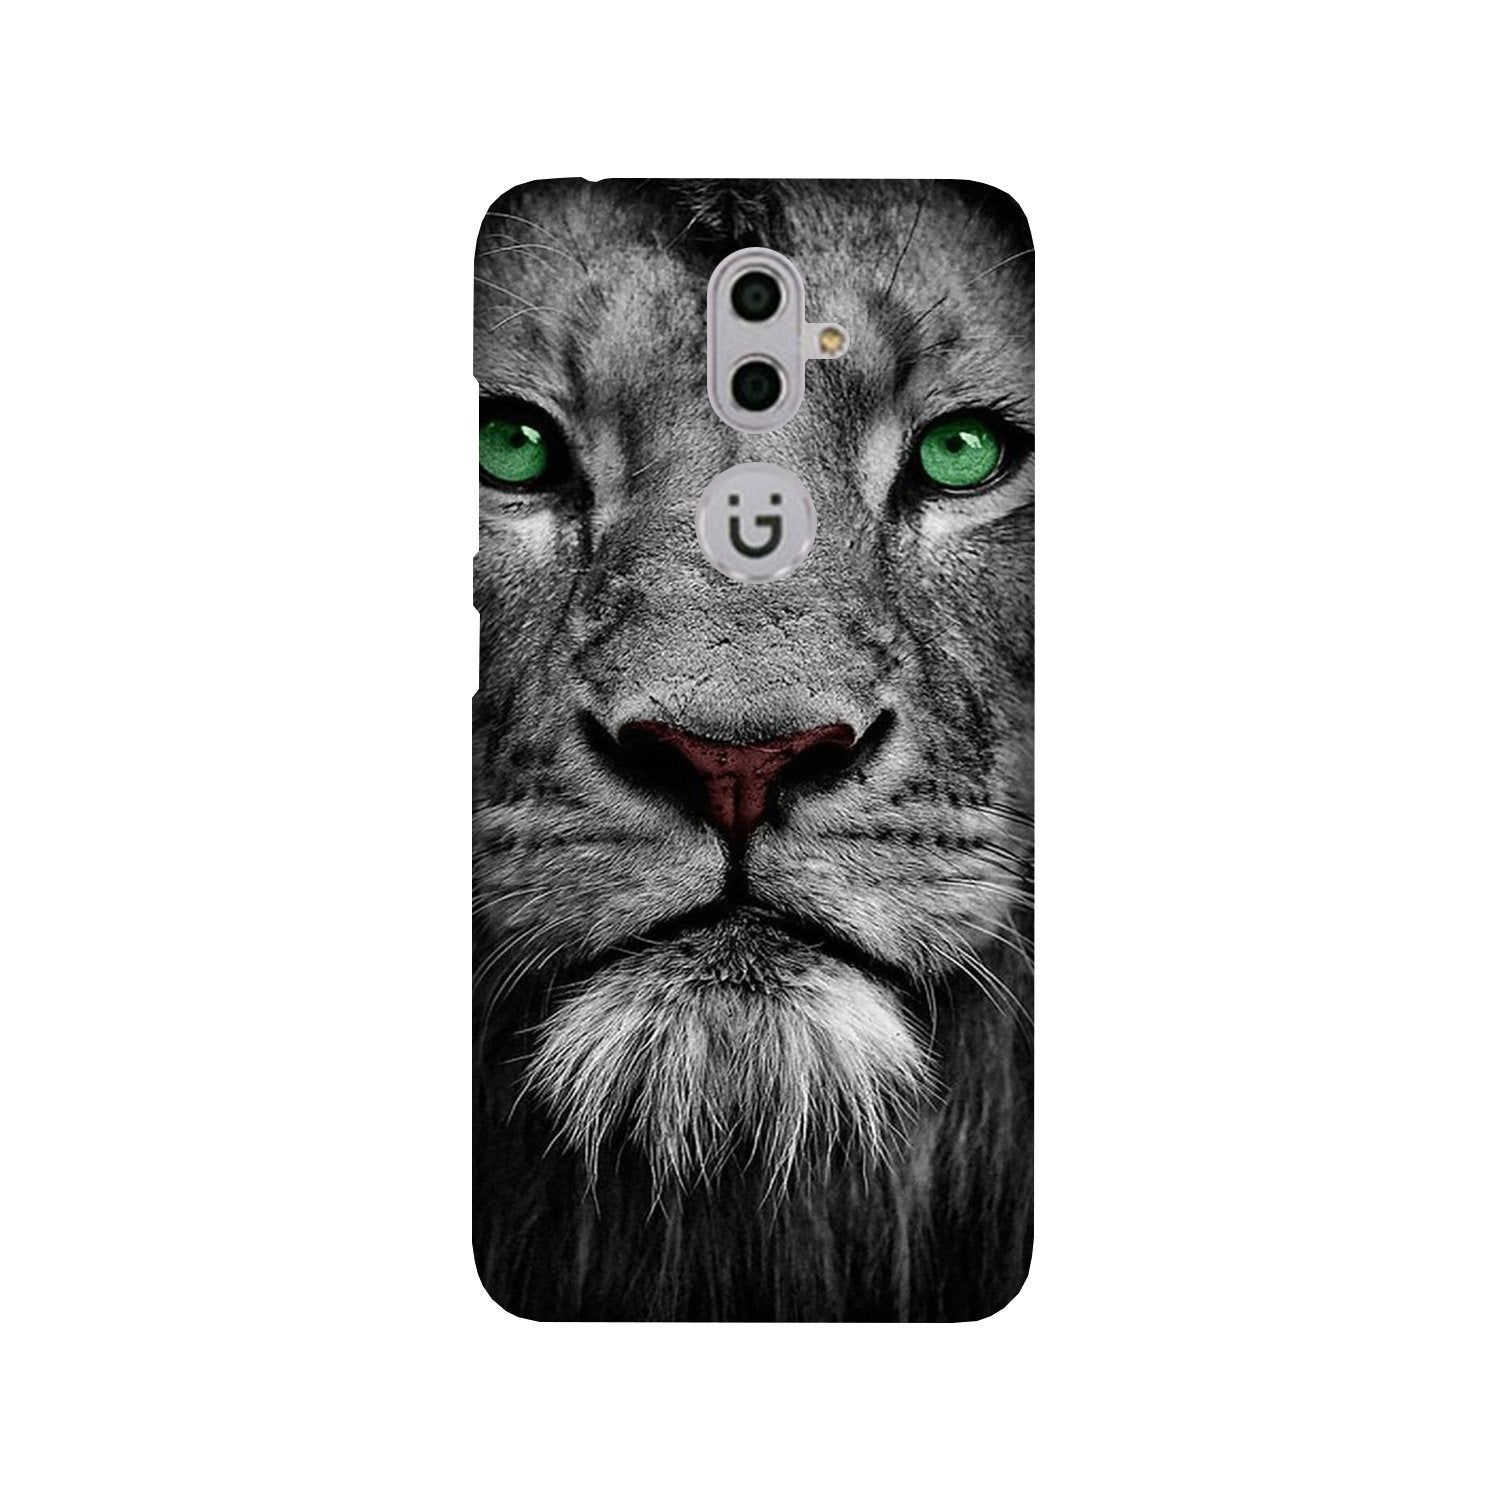 Lion Case for Gionee S9 (Design No. 272)